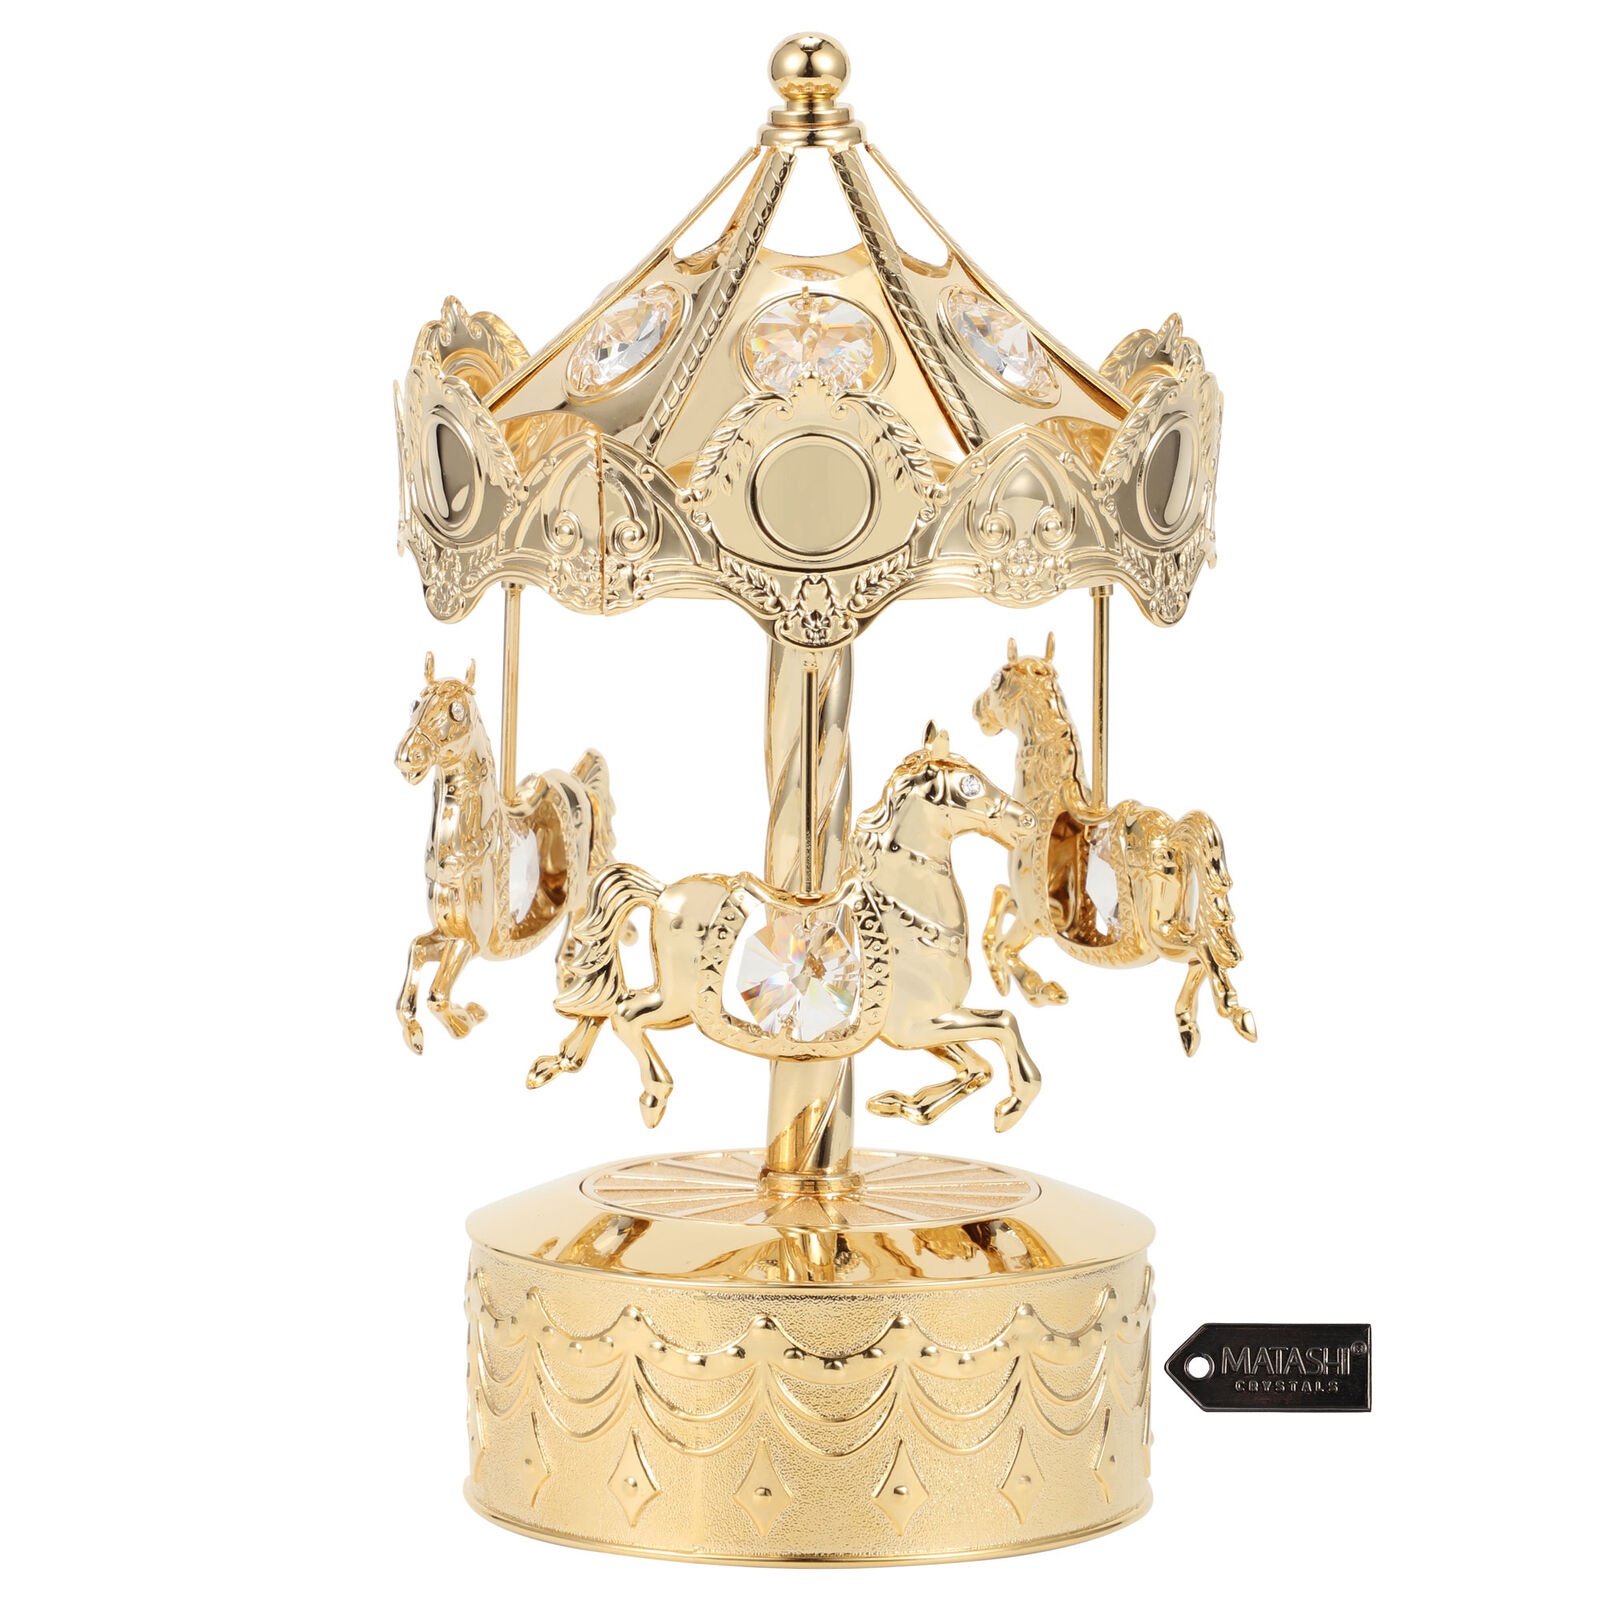 24K Gold Plated Music Box w/ Crystal Studded Carousel Horse Figurine by Matashi